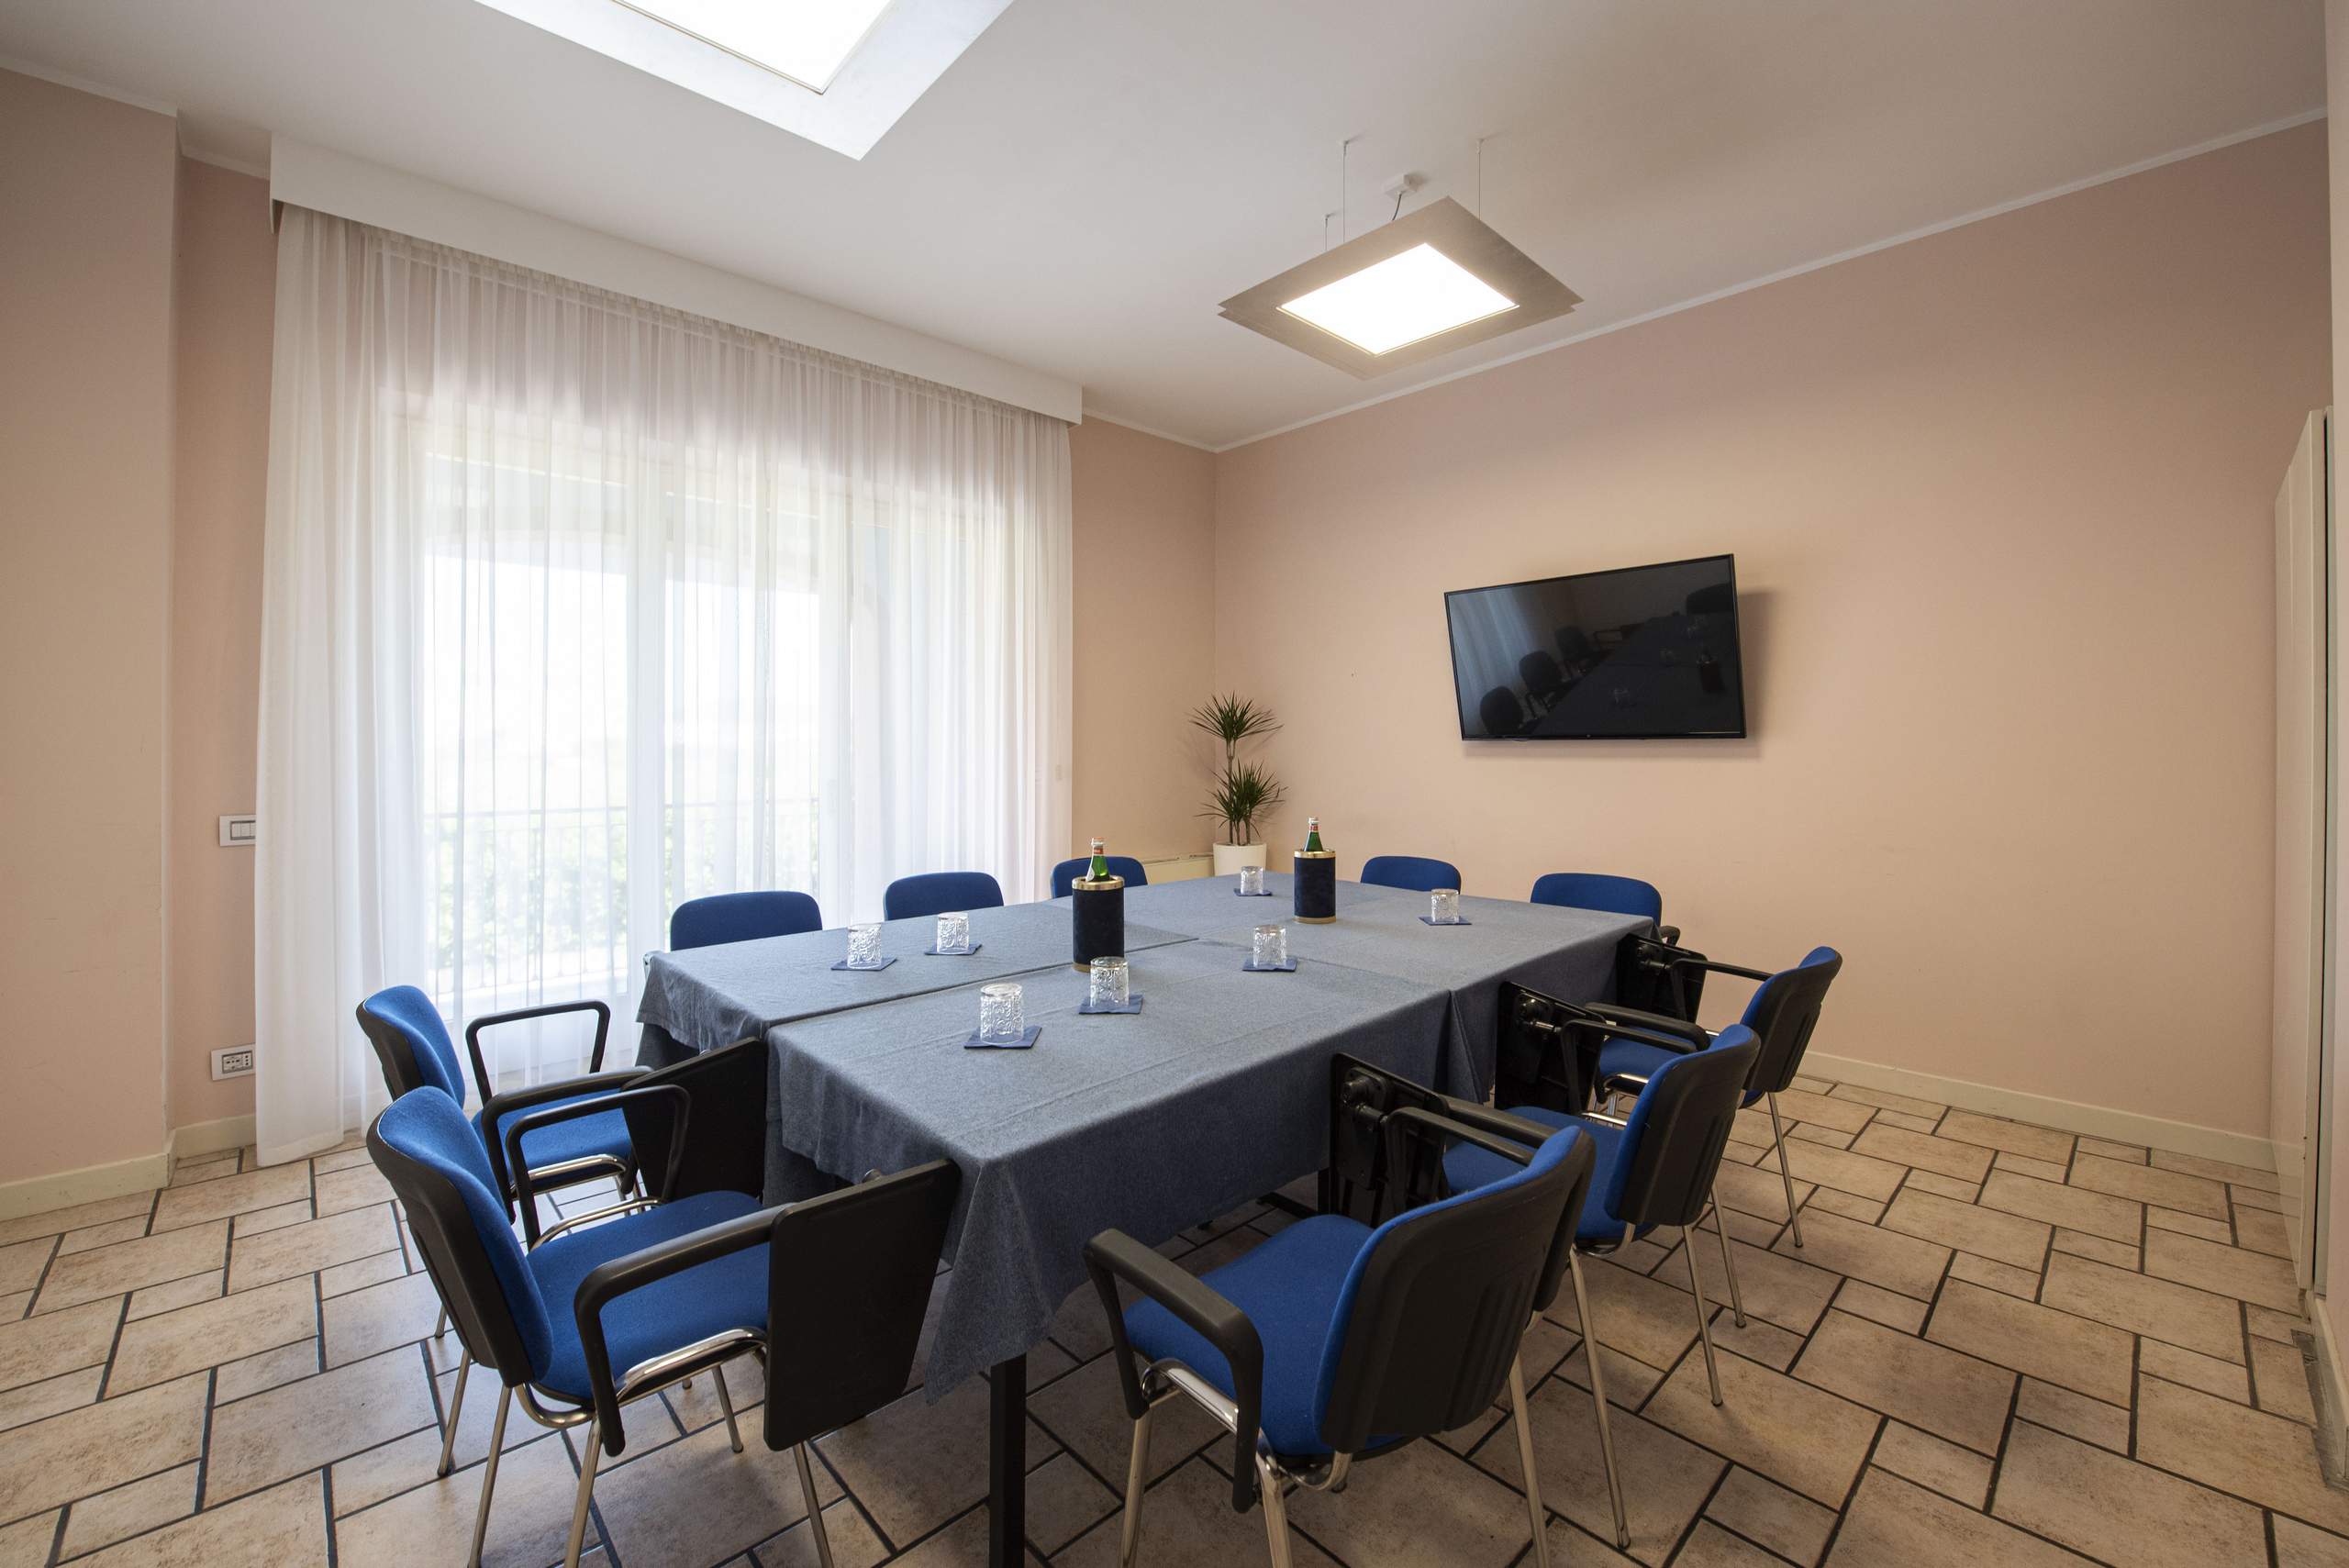 Meeting Room Ancona - Sala Pinta Hotel Cristoforo Colombo Osimo